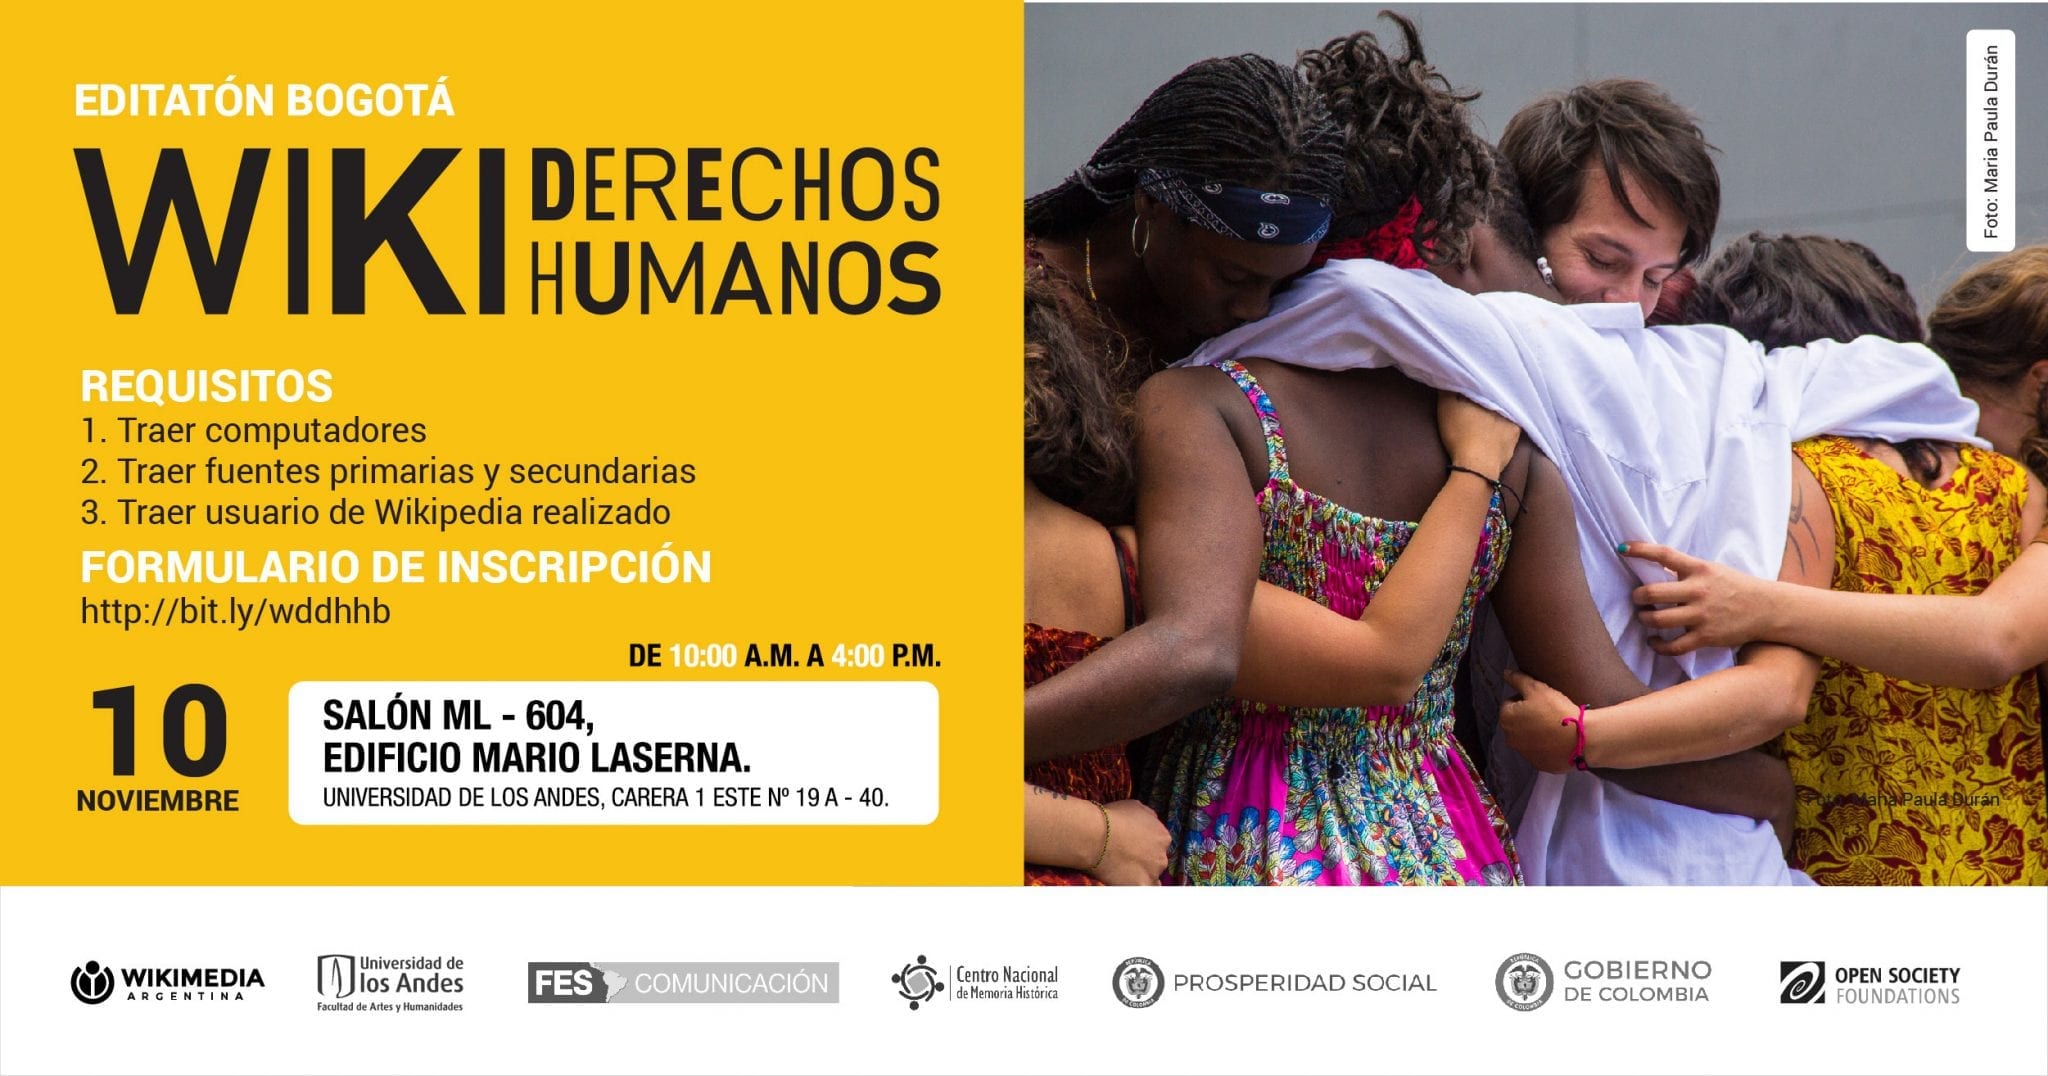 Editatón Bogotá, WIKI derechos humanos